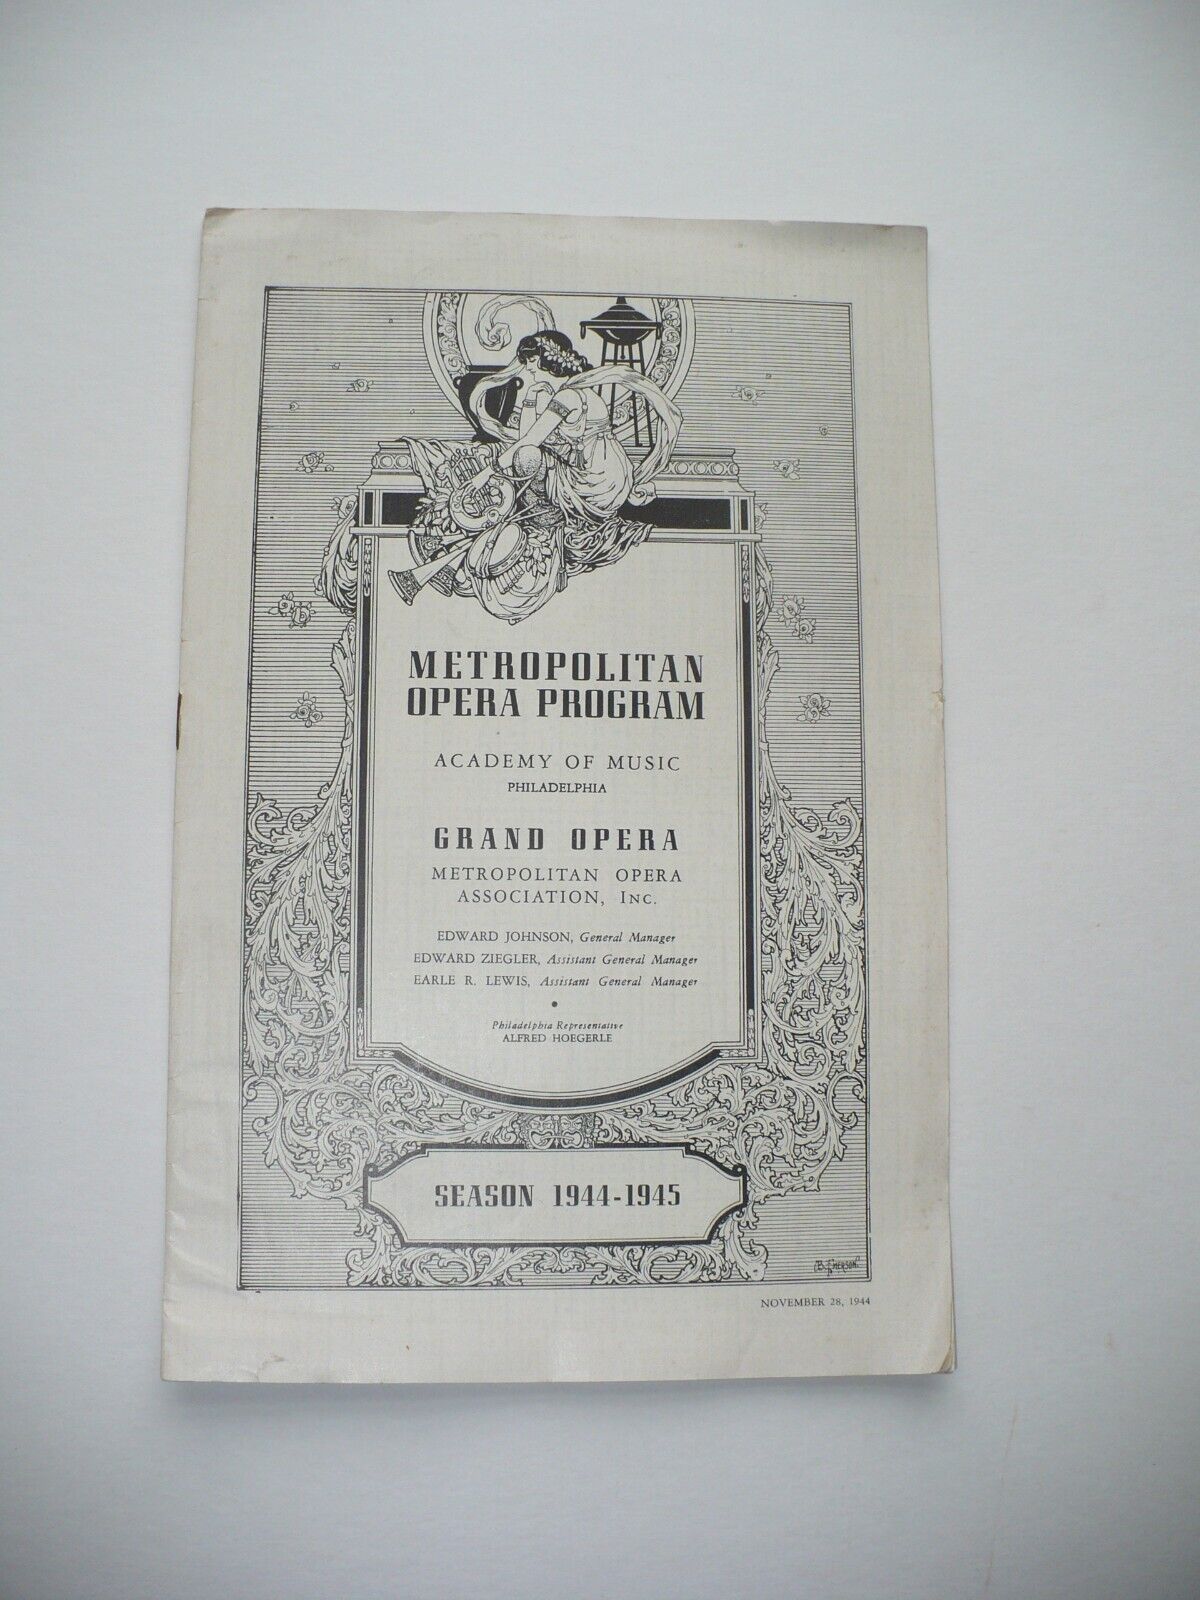 1944 AMERICAN BLANCHE THEBOM DEBUT PHILADELPHIA METROPOLITAN OPERA MUSIC PROGRAM